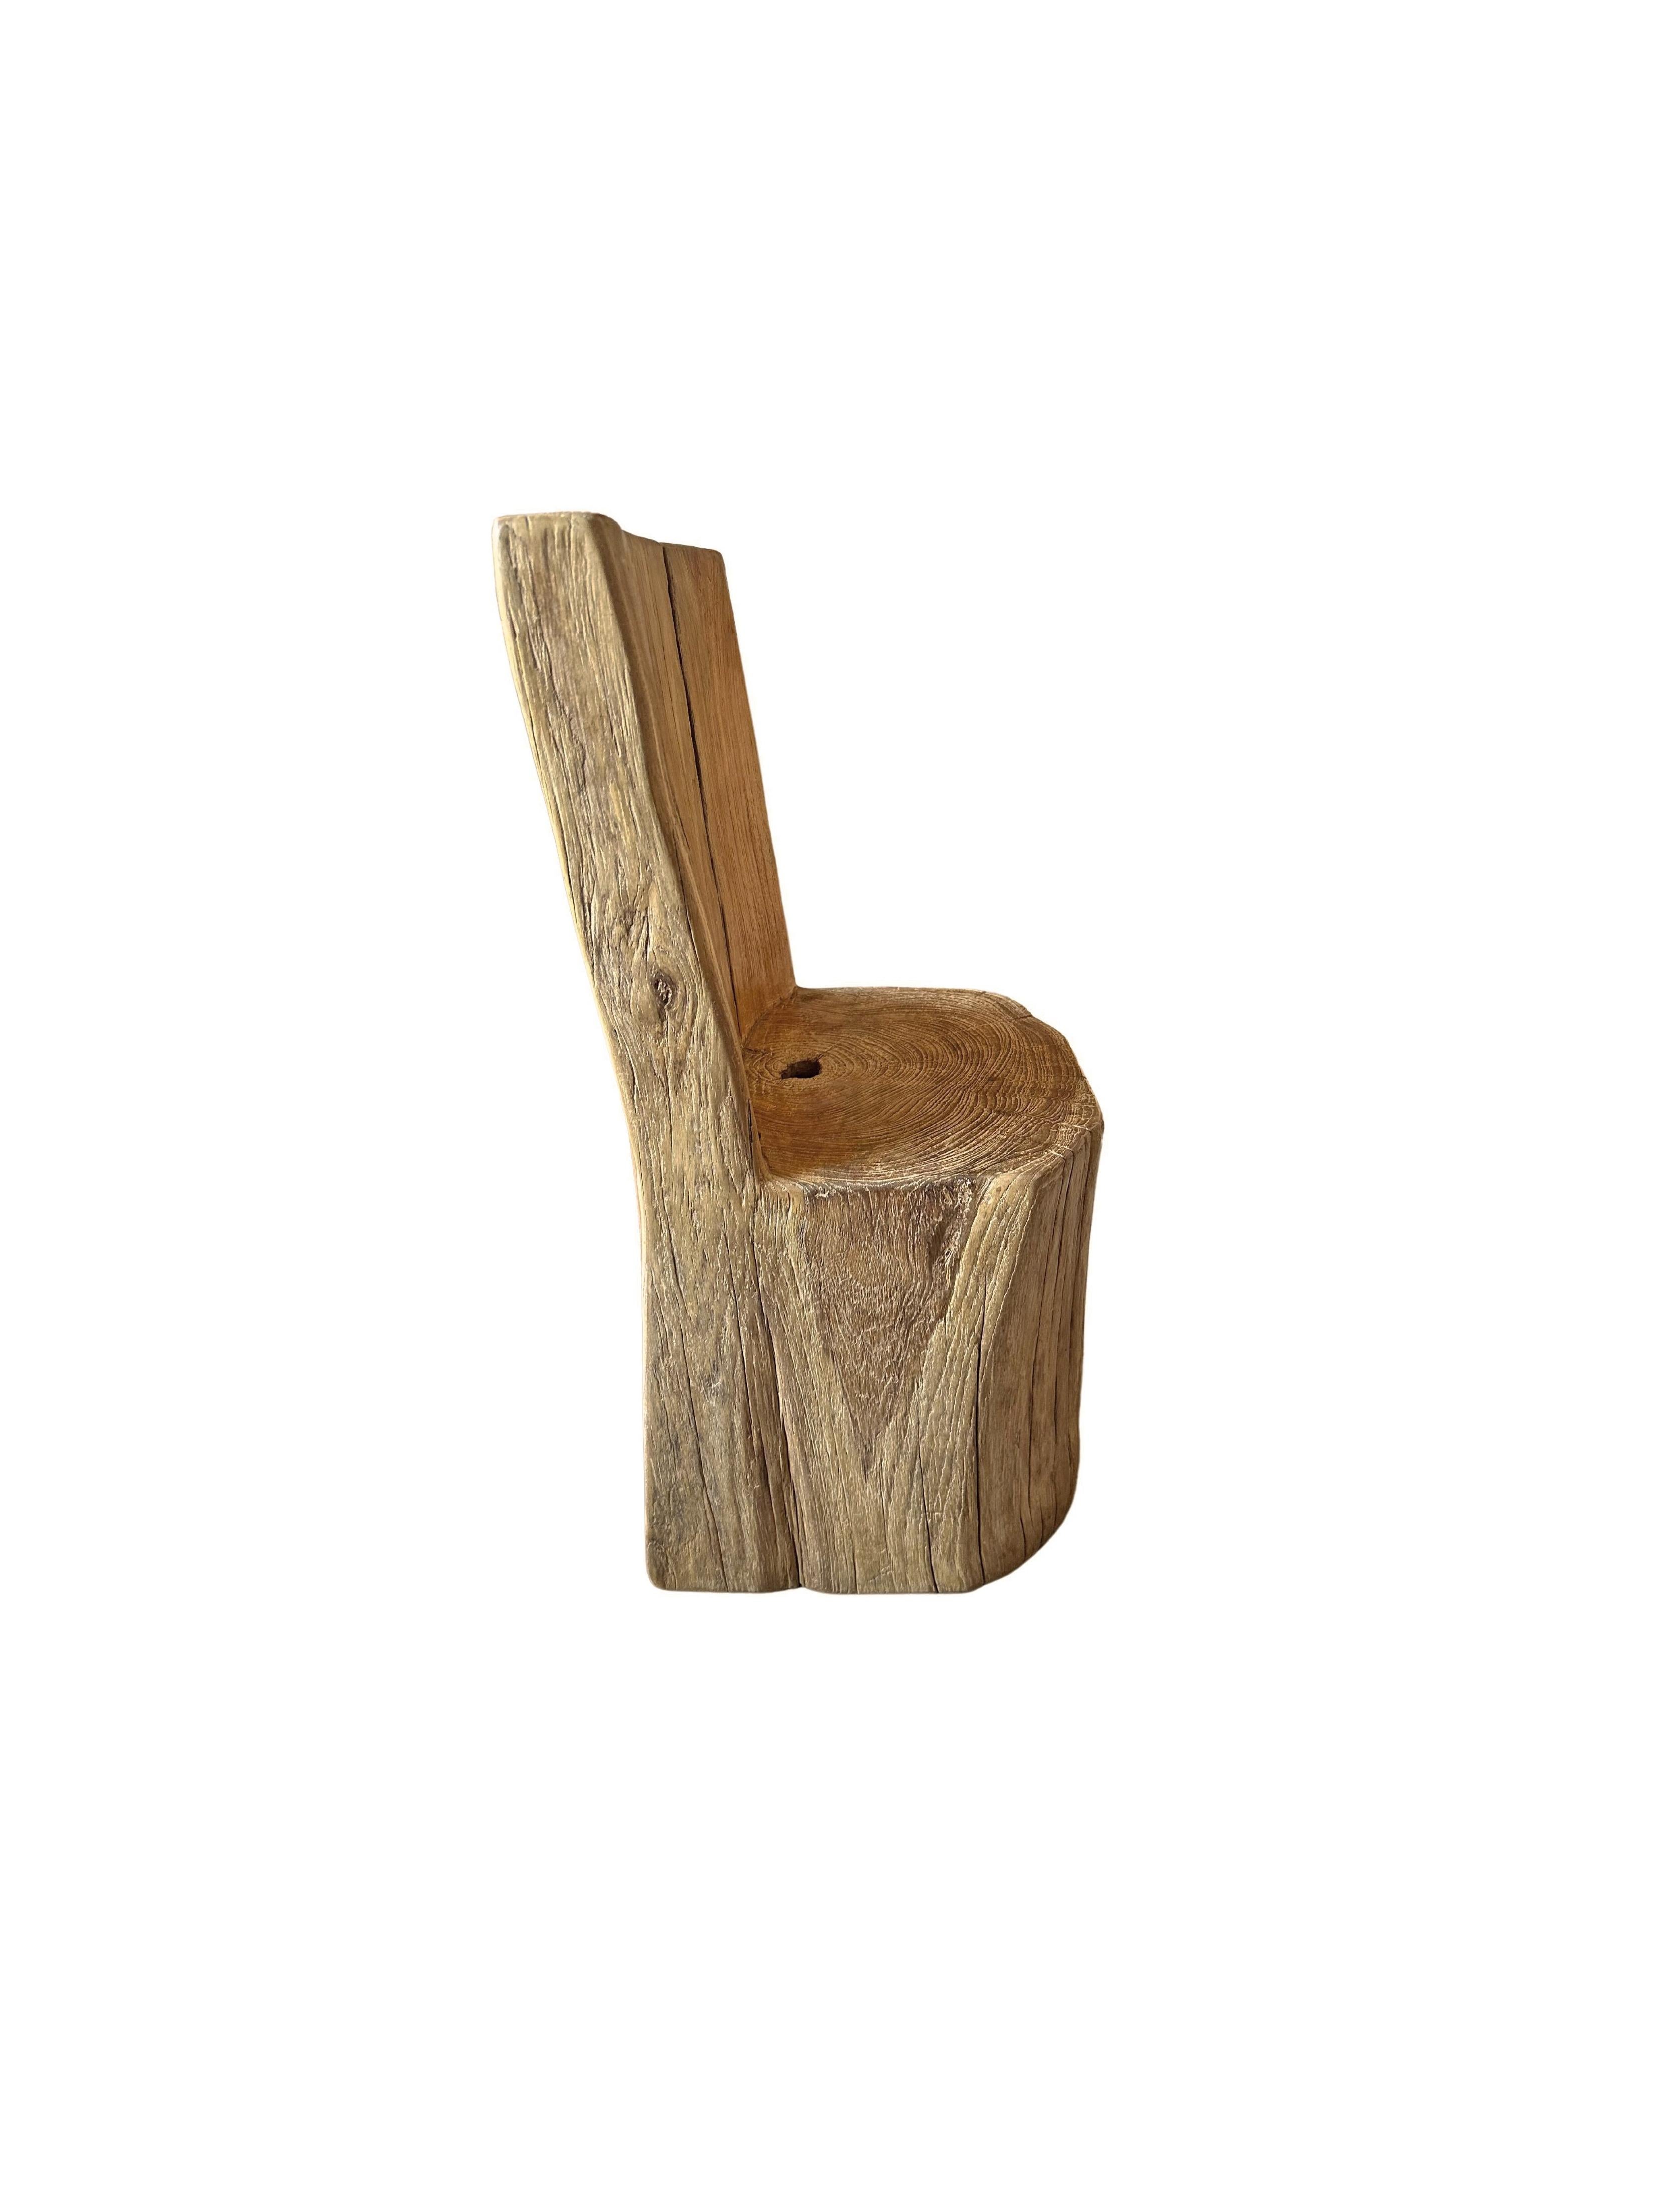 Sculptural Soild Teak Wood Chair For Sale 1